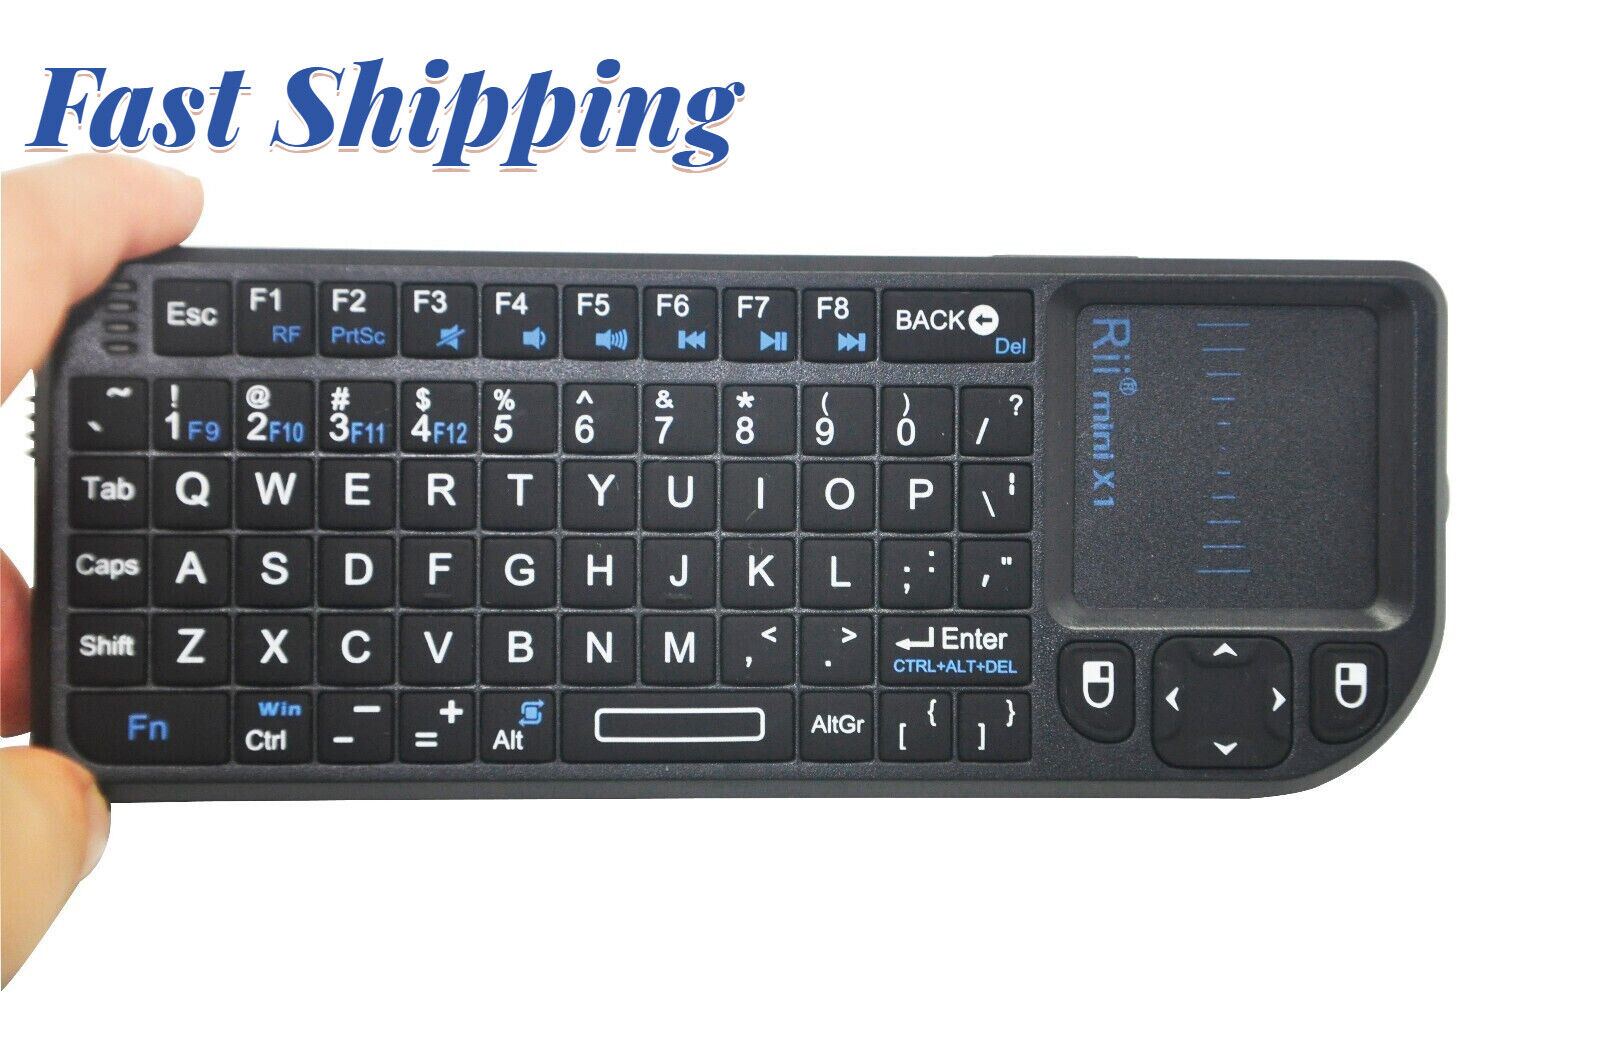 Rii Mini X1 2.4G Wireless Mini Keyboard with Touchpad for PC Smart TV